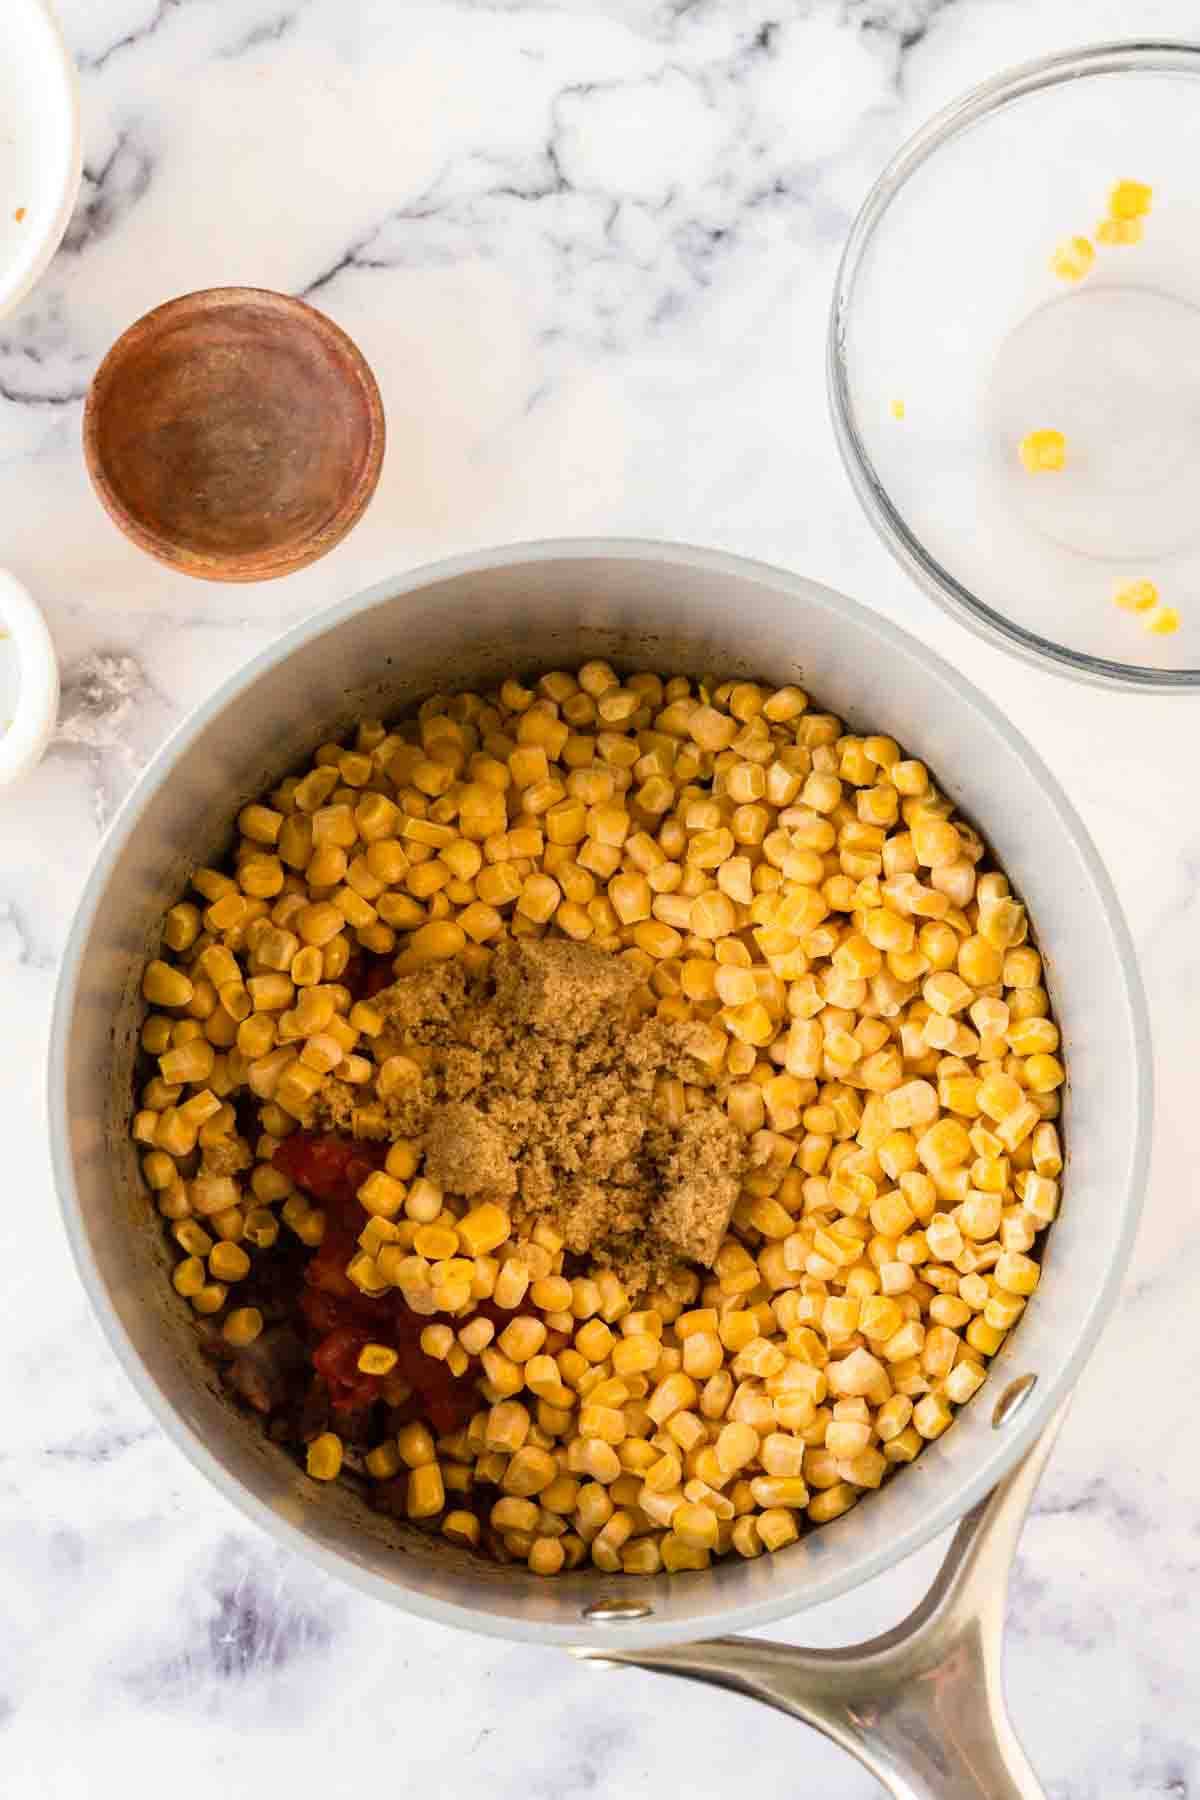 Corn added to the pot of brunswick stew.
